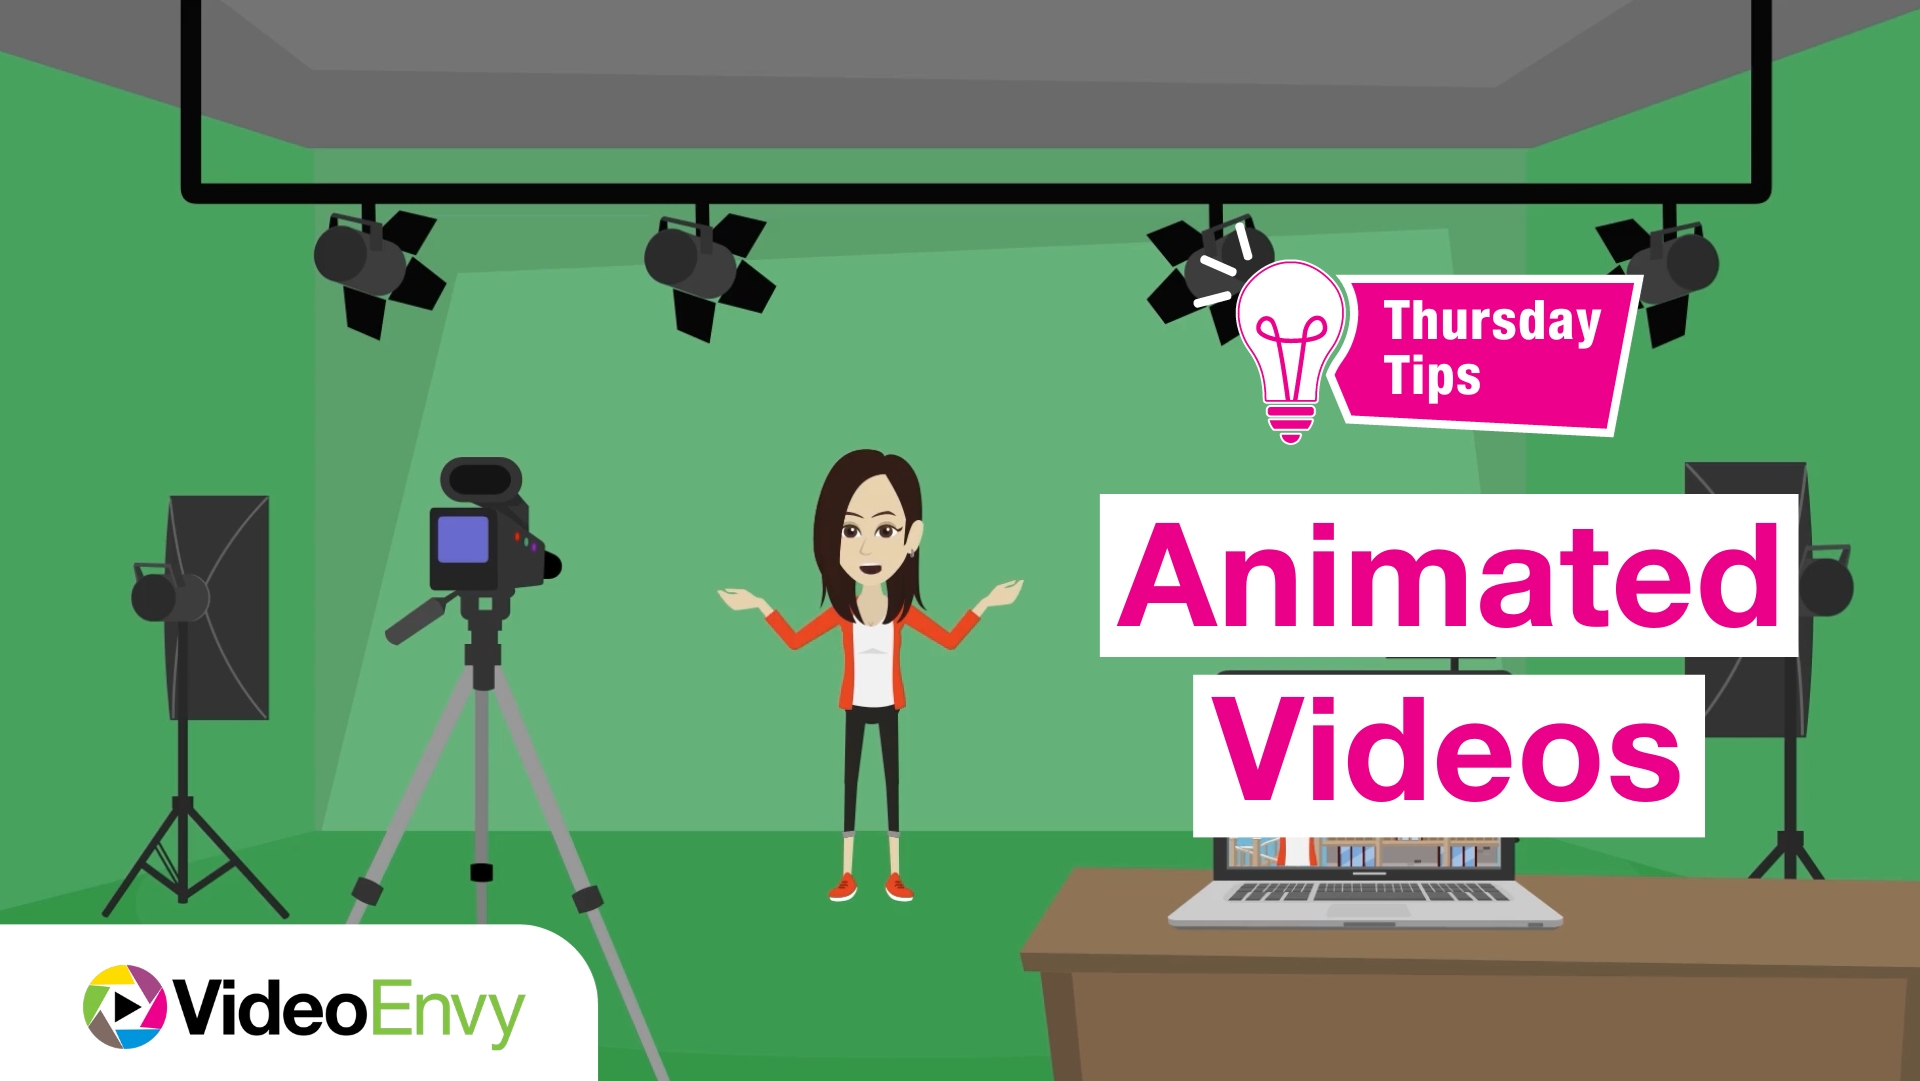 Thursday Tips: Animated Videos